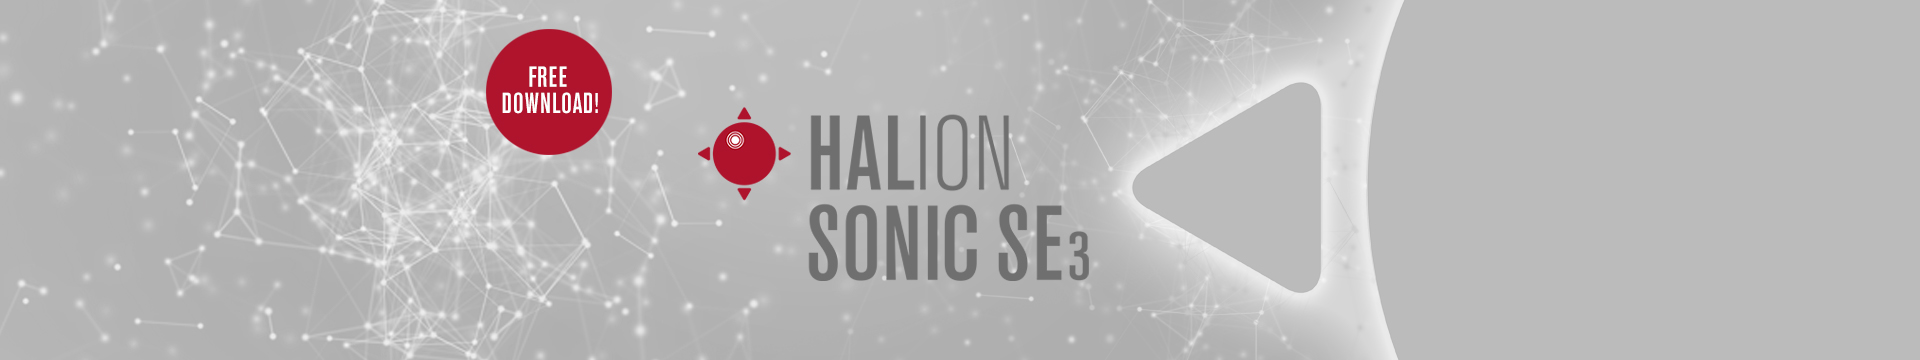 halion sonic se download free